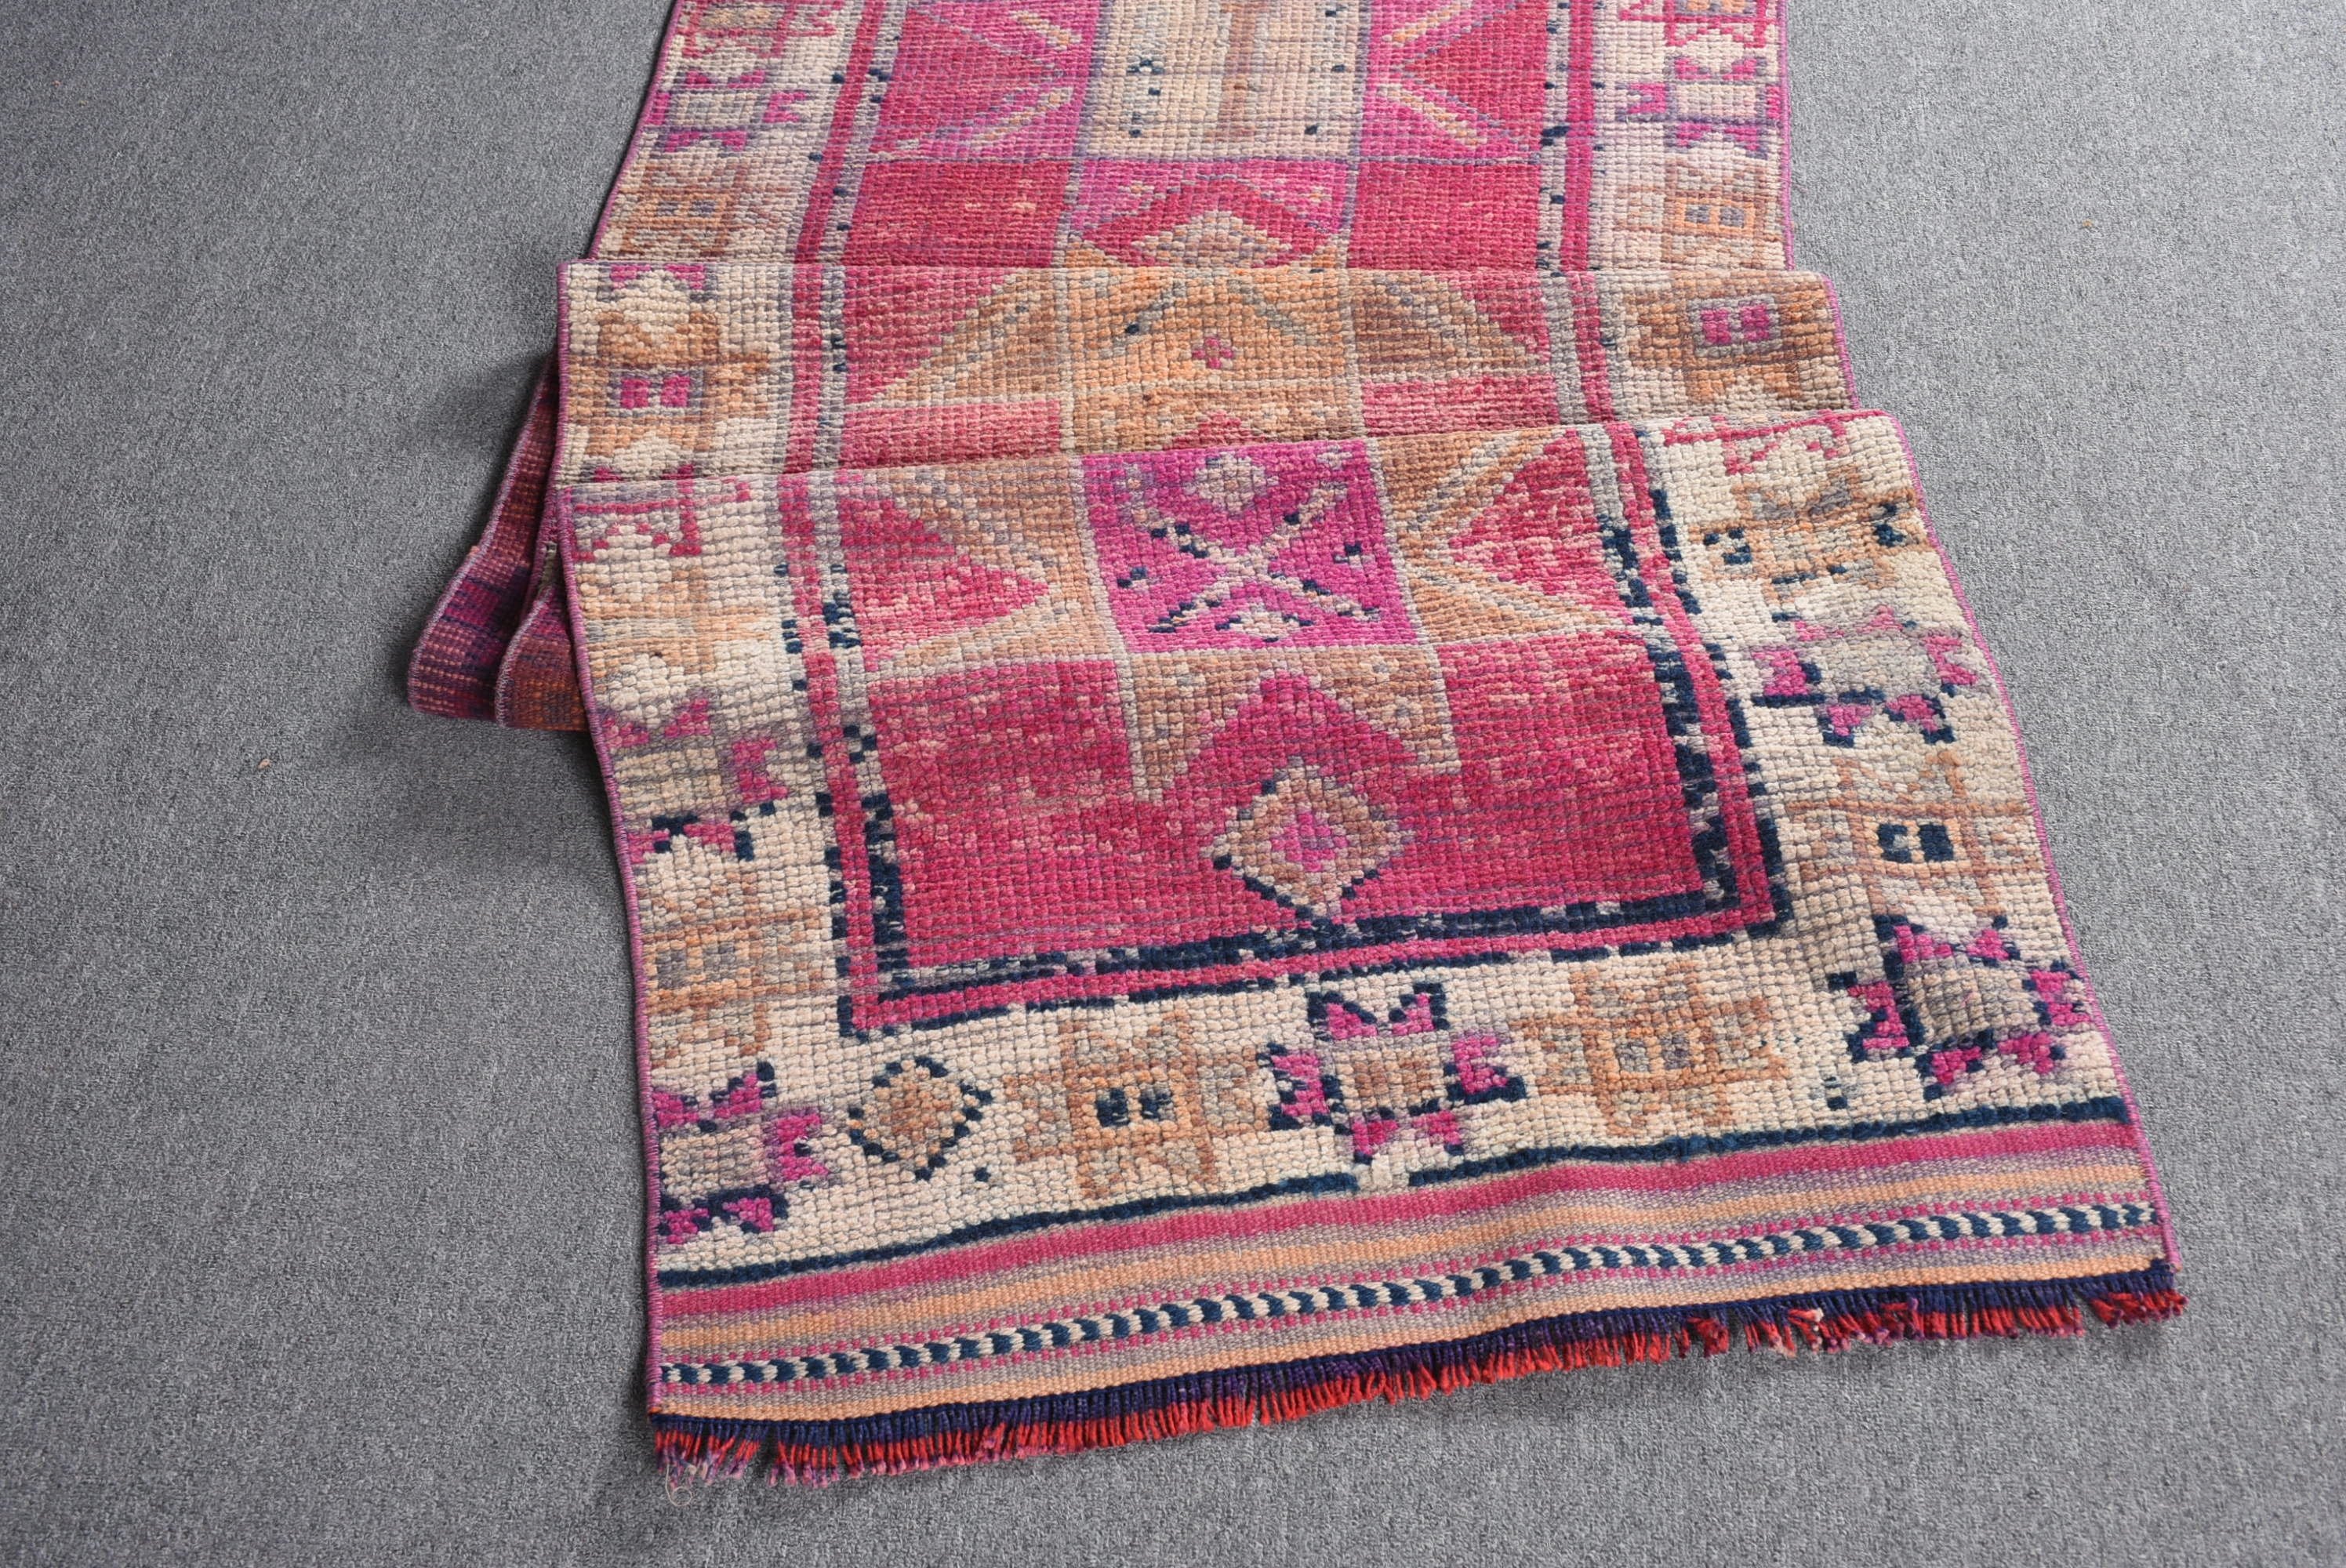 Vintage Rugs, Corridor Rug, Turkish Rug, 2.6x10.4 ft Runner Rugs, Home Decor Rugs, Pink Oriental Rug, Rugs for Kitchen